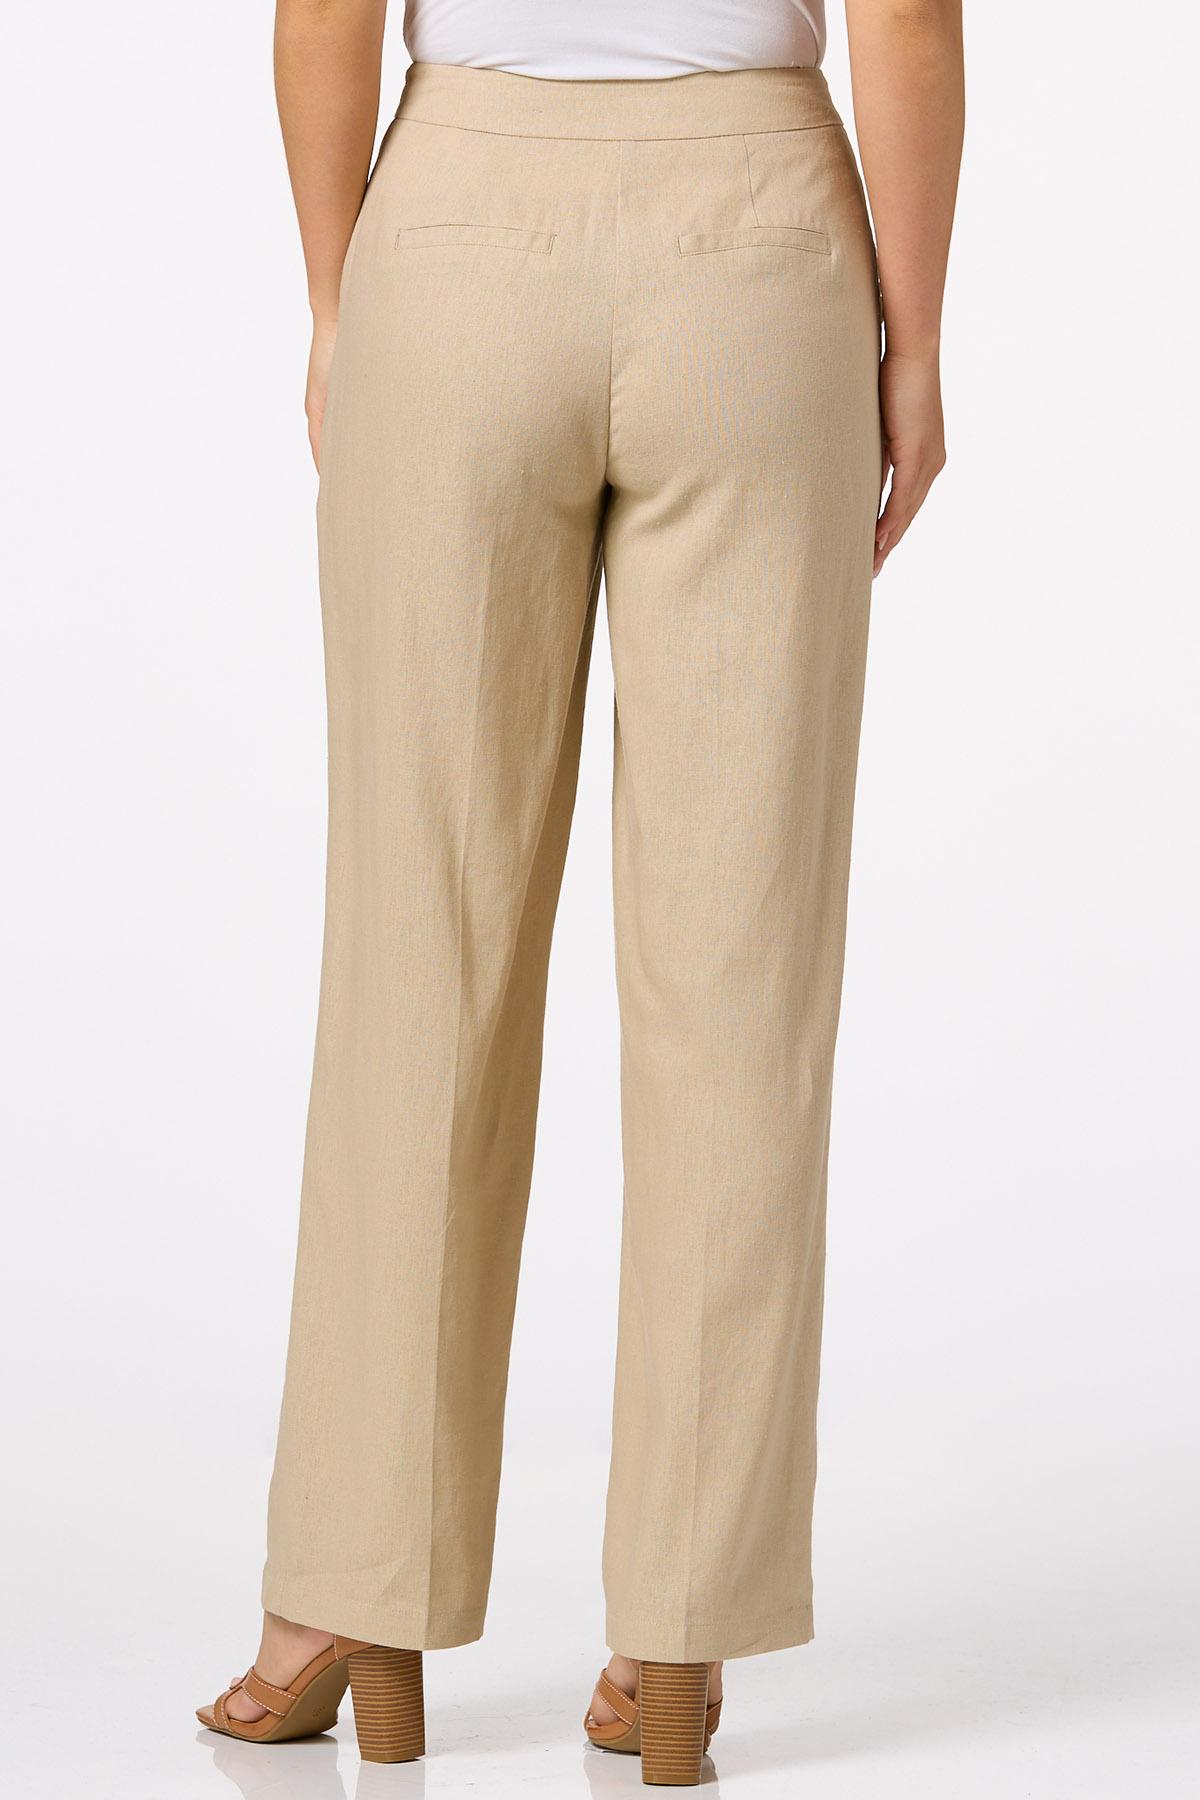 Cato Fashions  Cato Solid Linen Trouser Pants